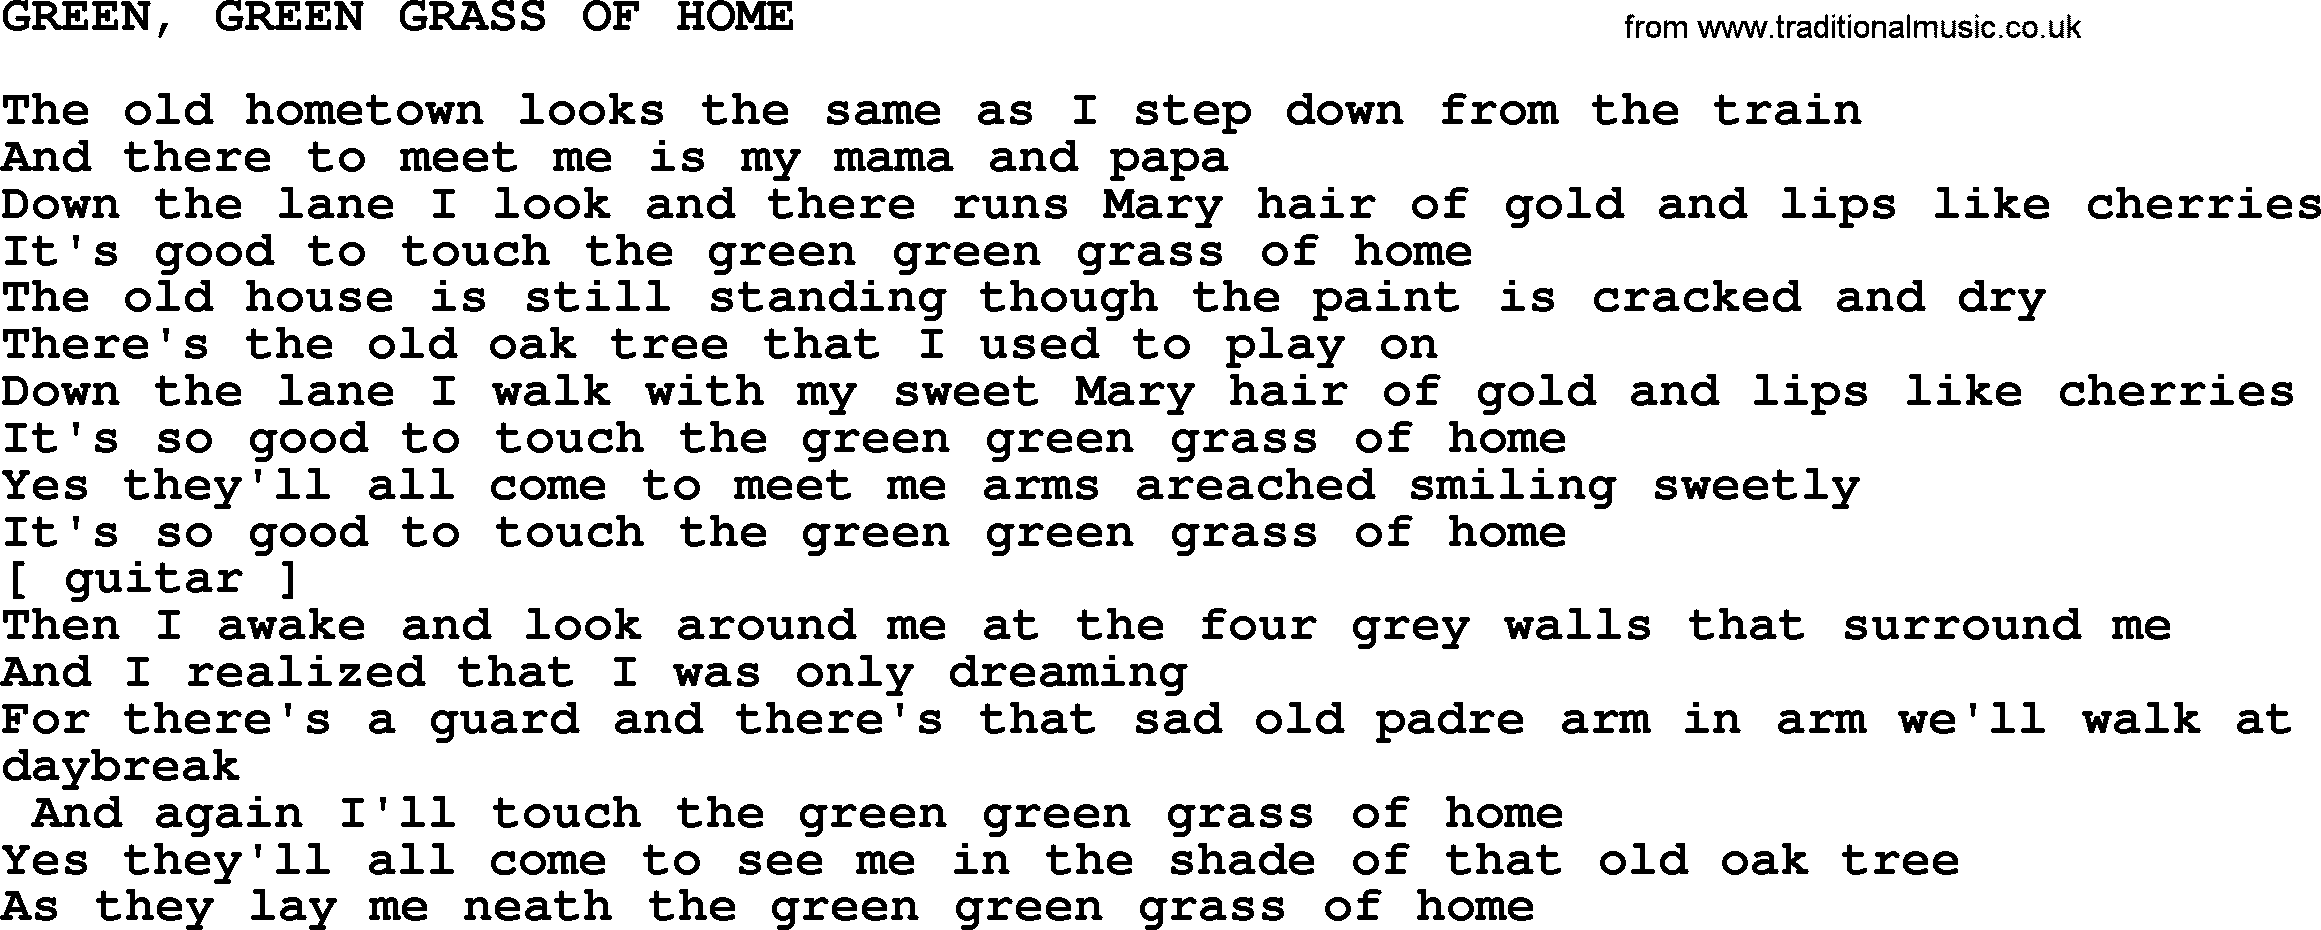 Merle Haggard song: Green, Green Grass Of Home, lyrics.